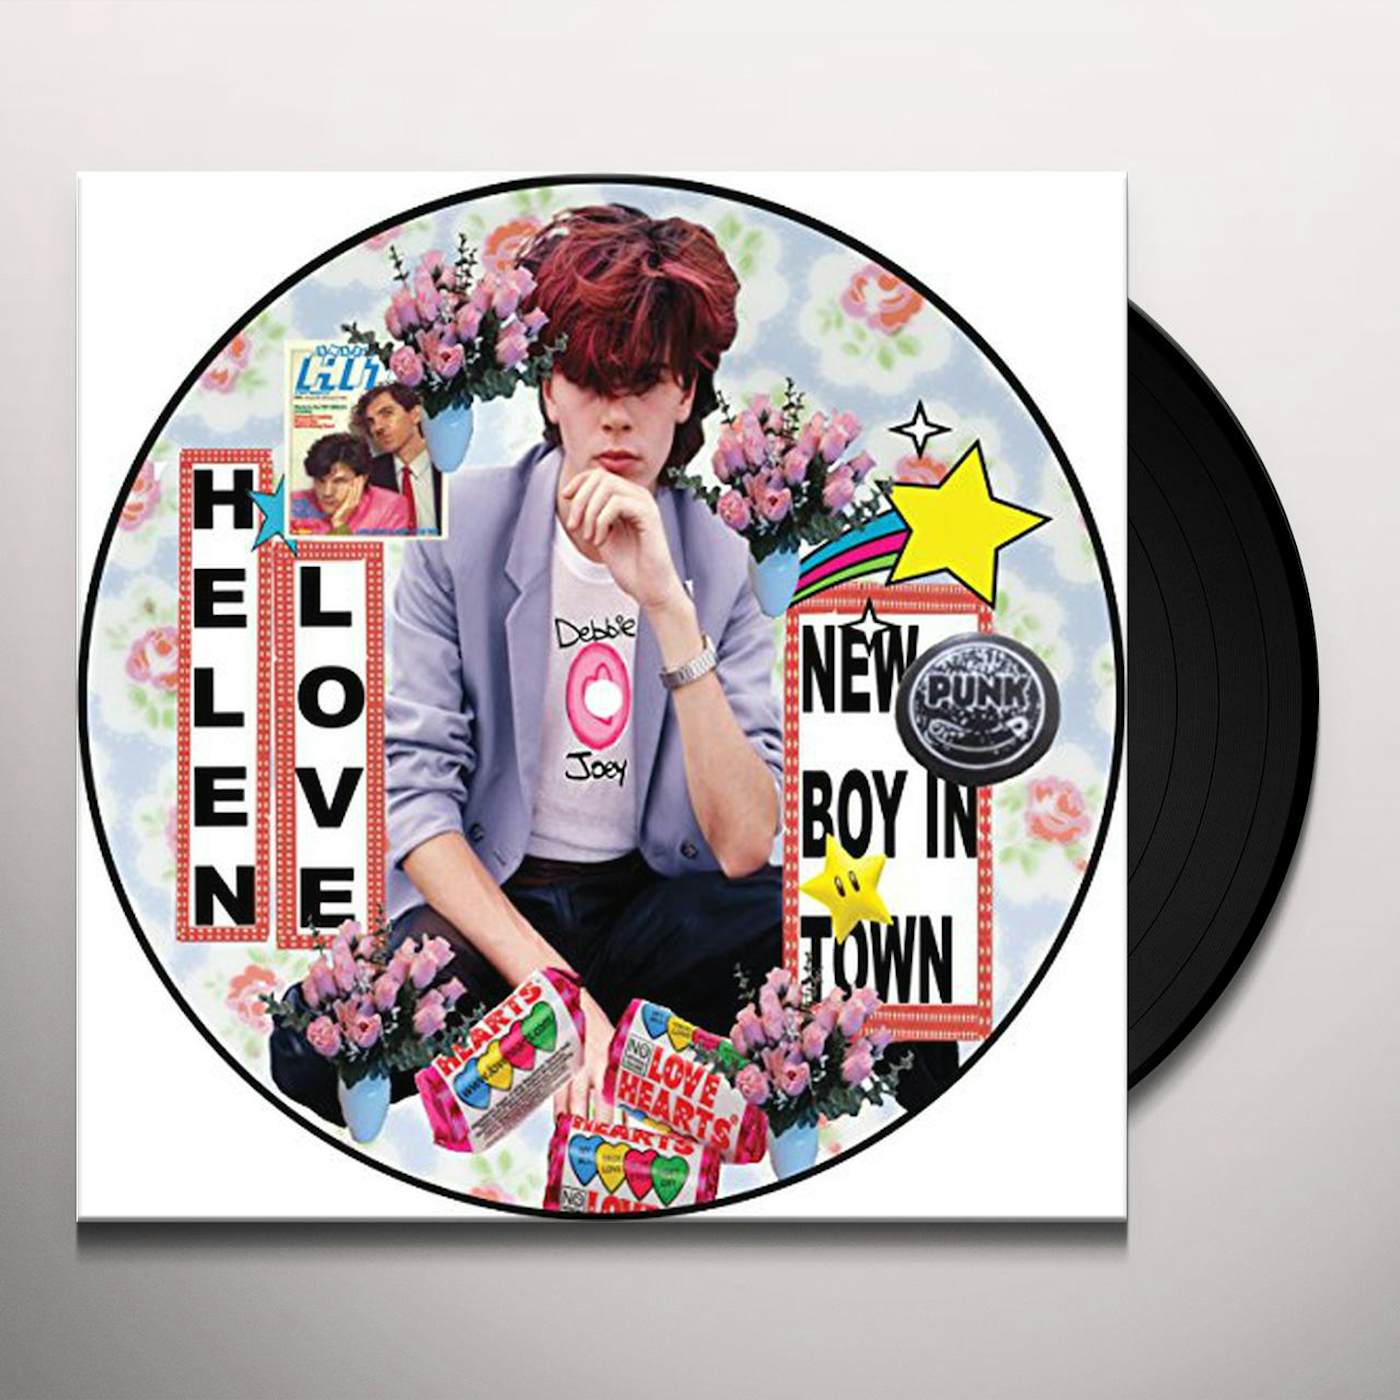 Helen Love New Boy In Town Vinyl Record